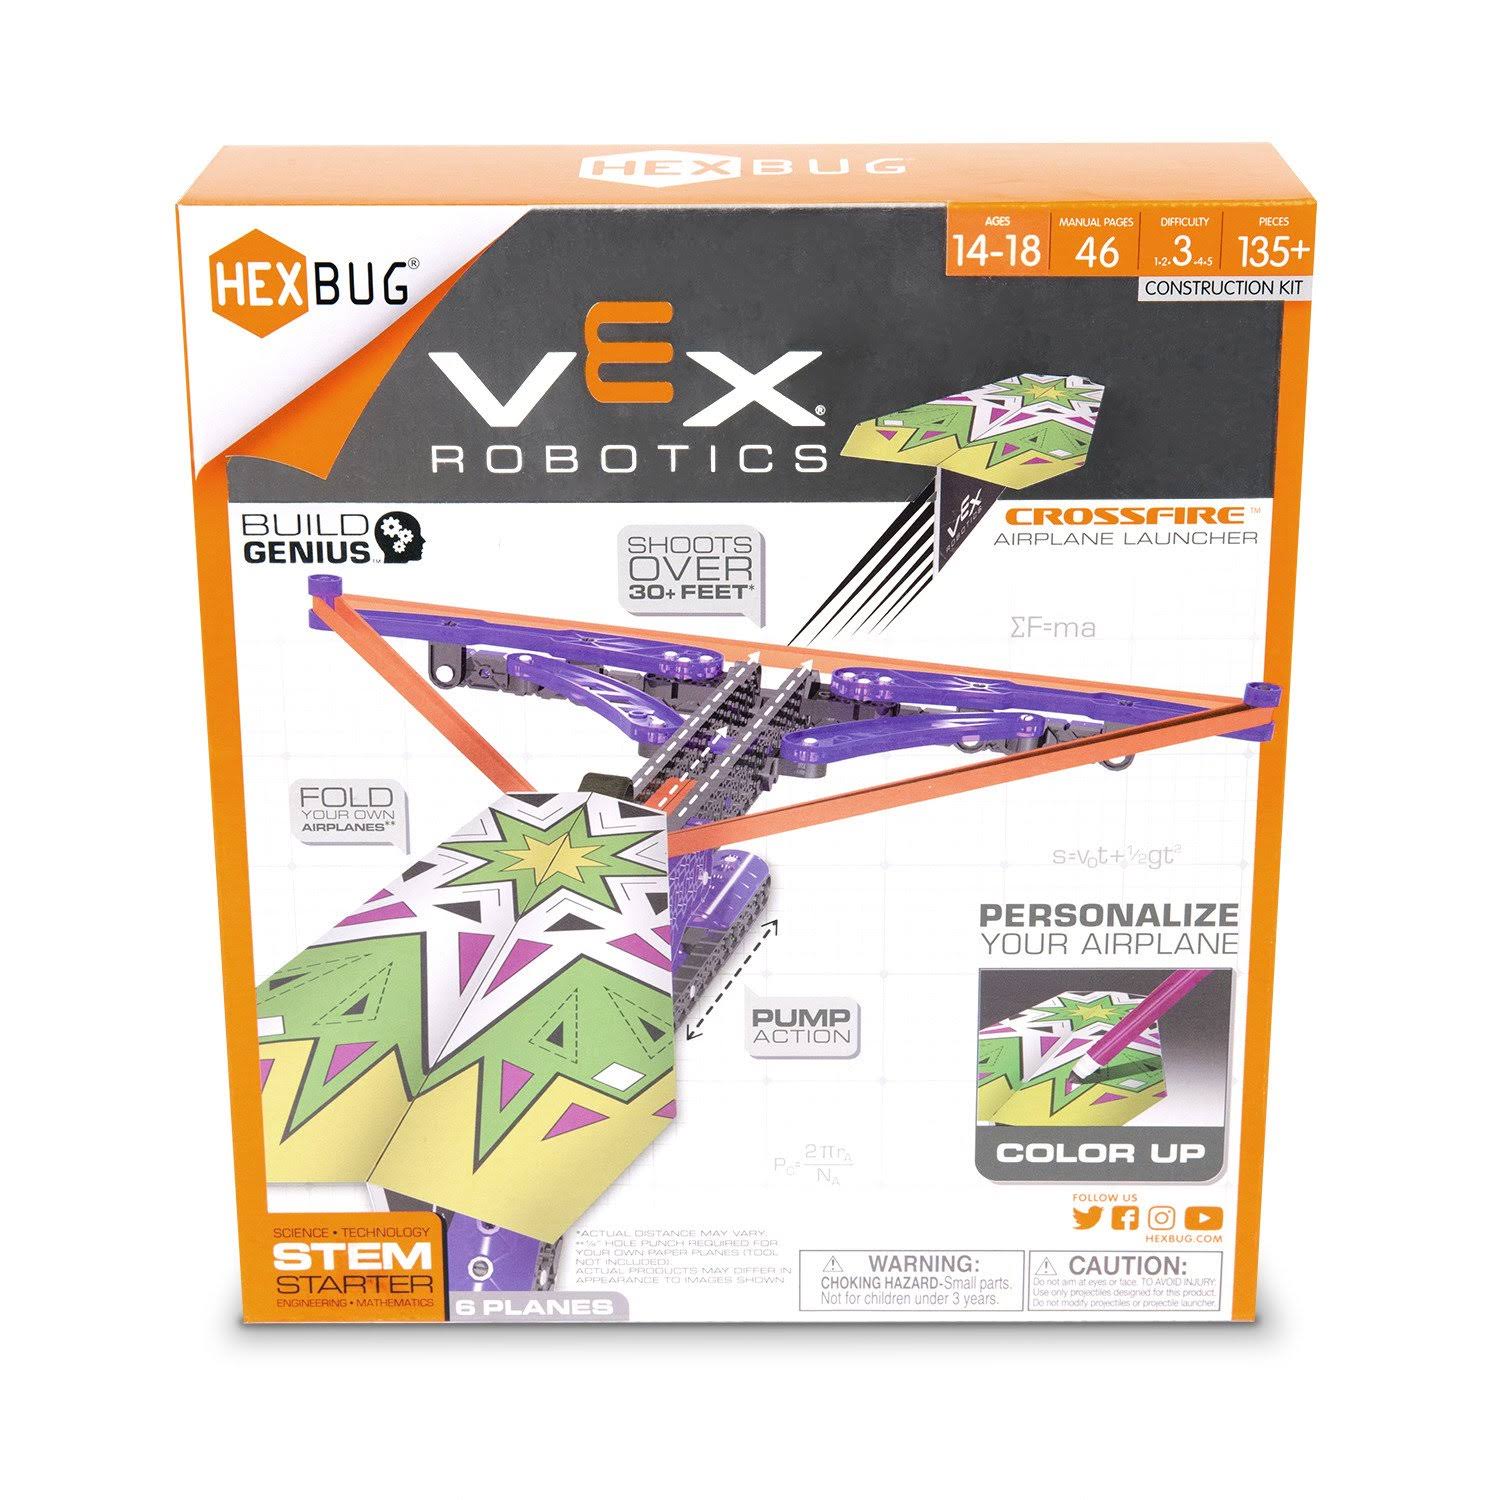 Hexbug VEX Robotics Crossfire Airplane Launcher Construction Kit